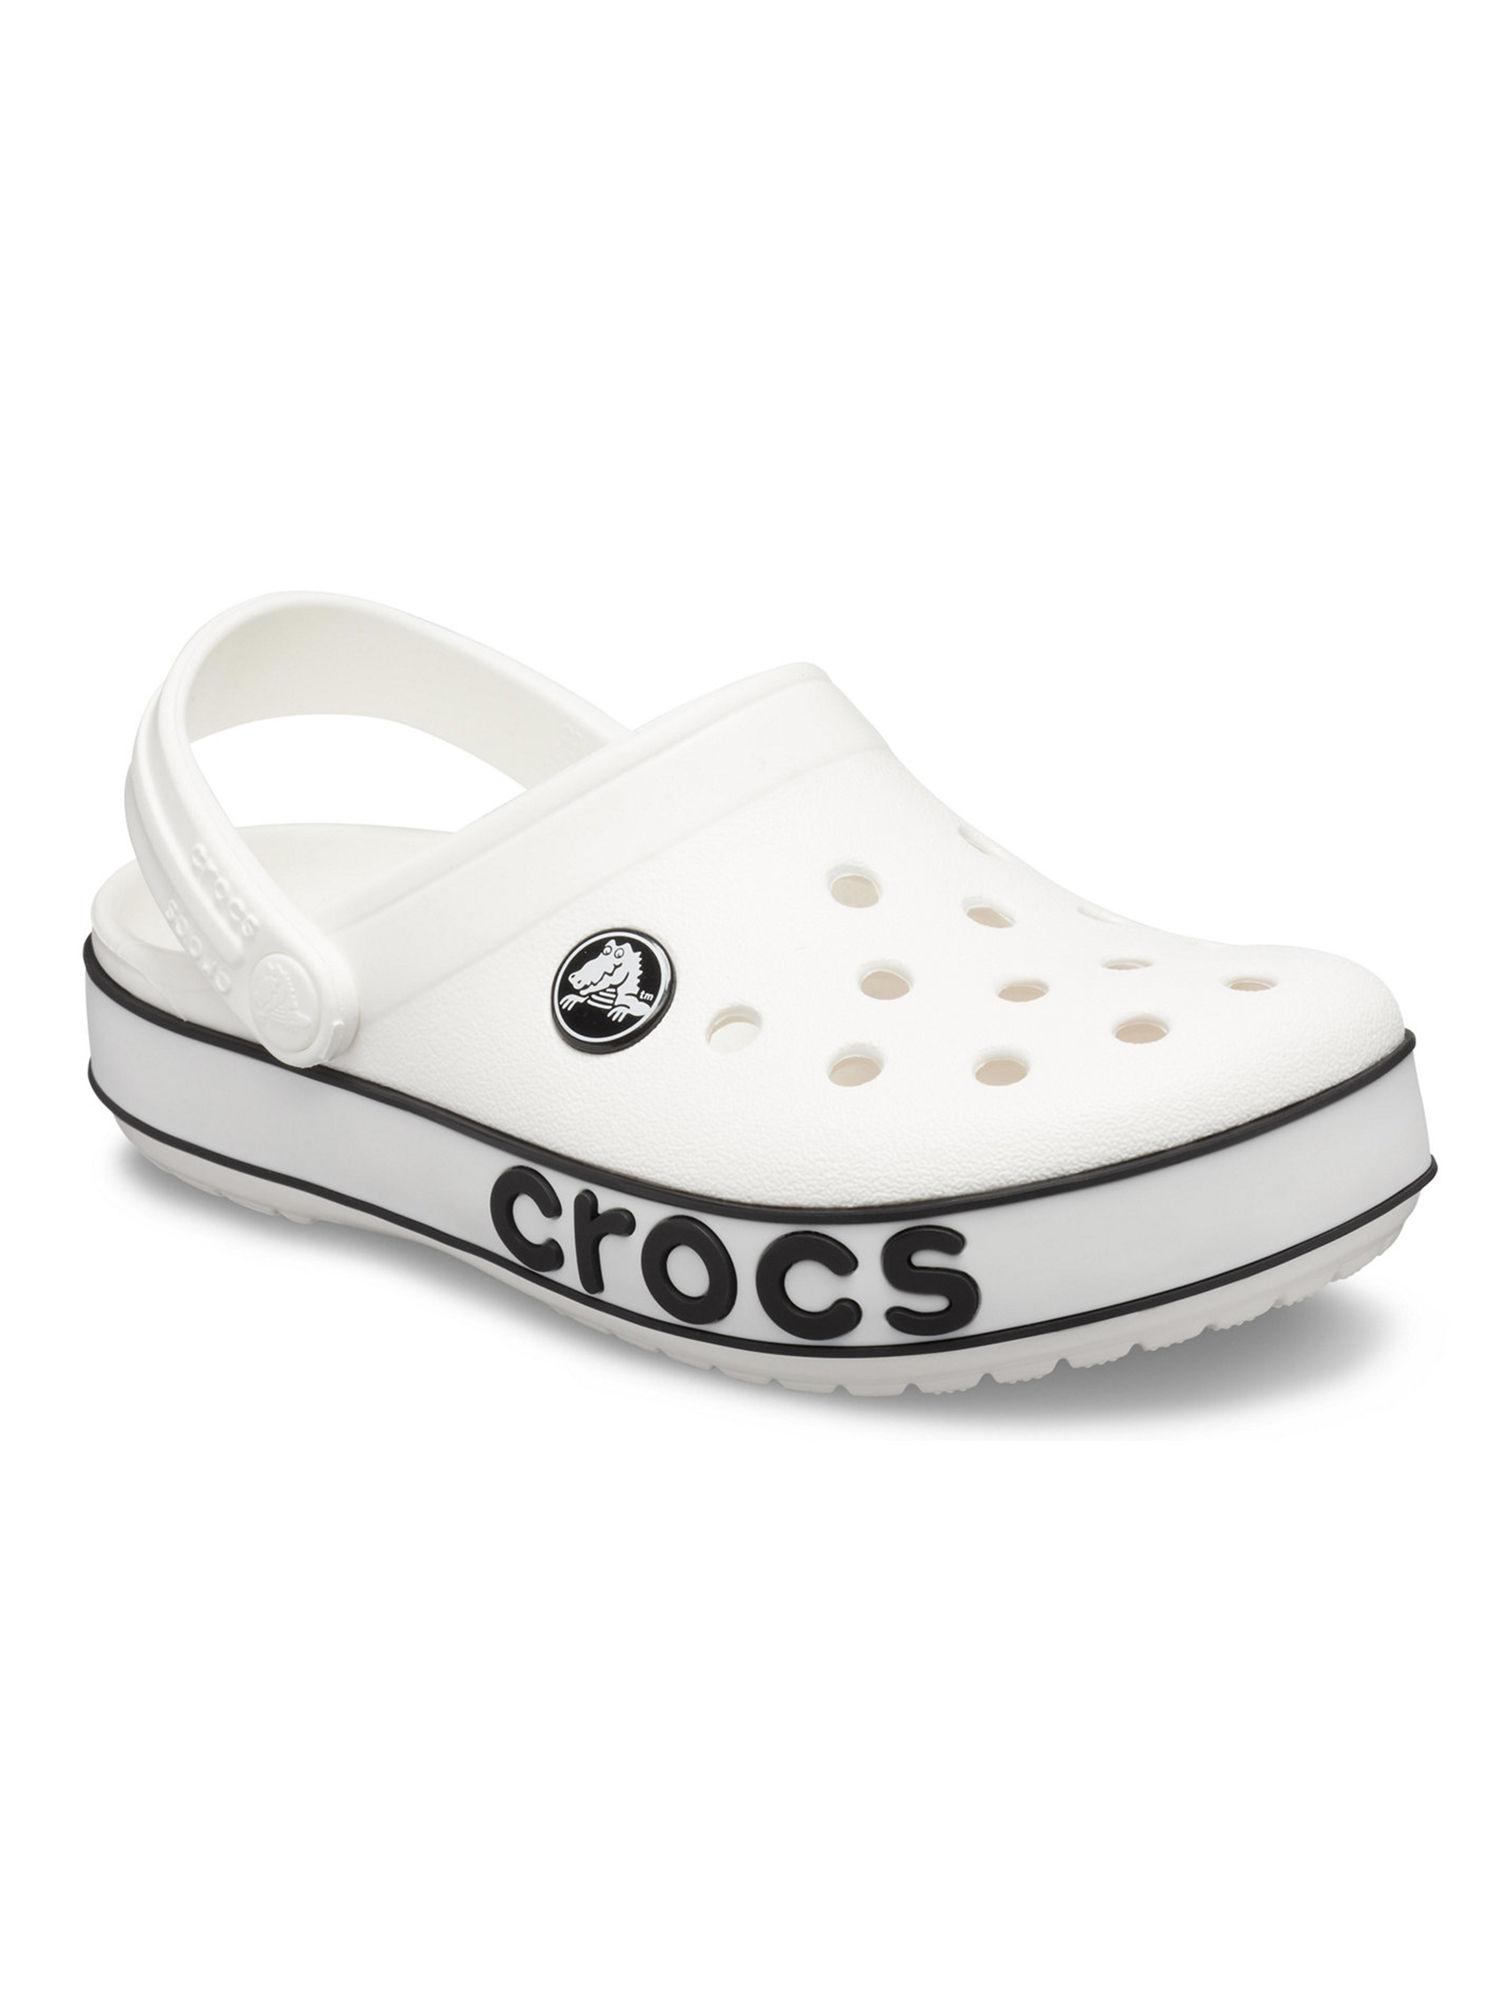 crocs crocband j3